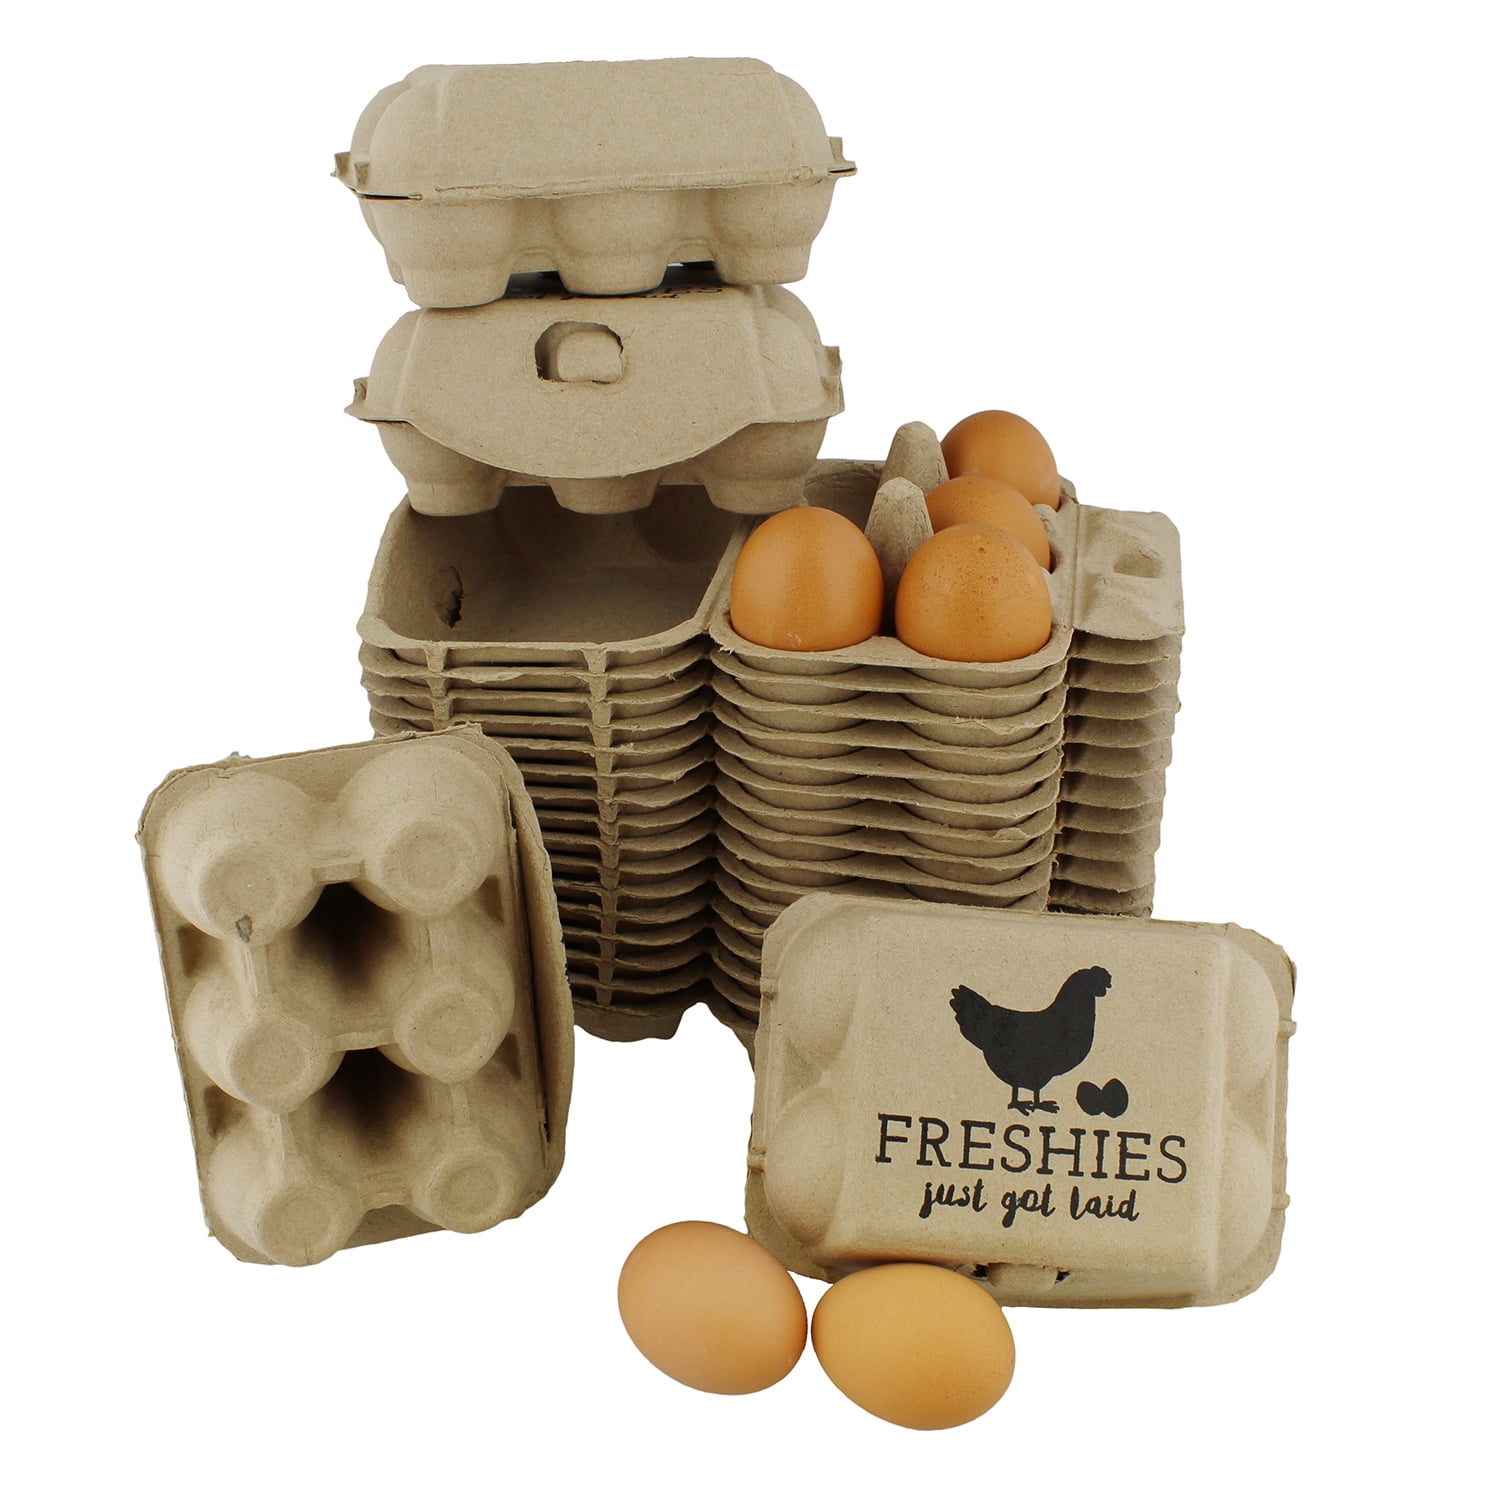 Rural365 Plastic Egg Carton for 12 Eggs 12ct Reusable Chicken